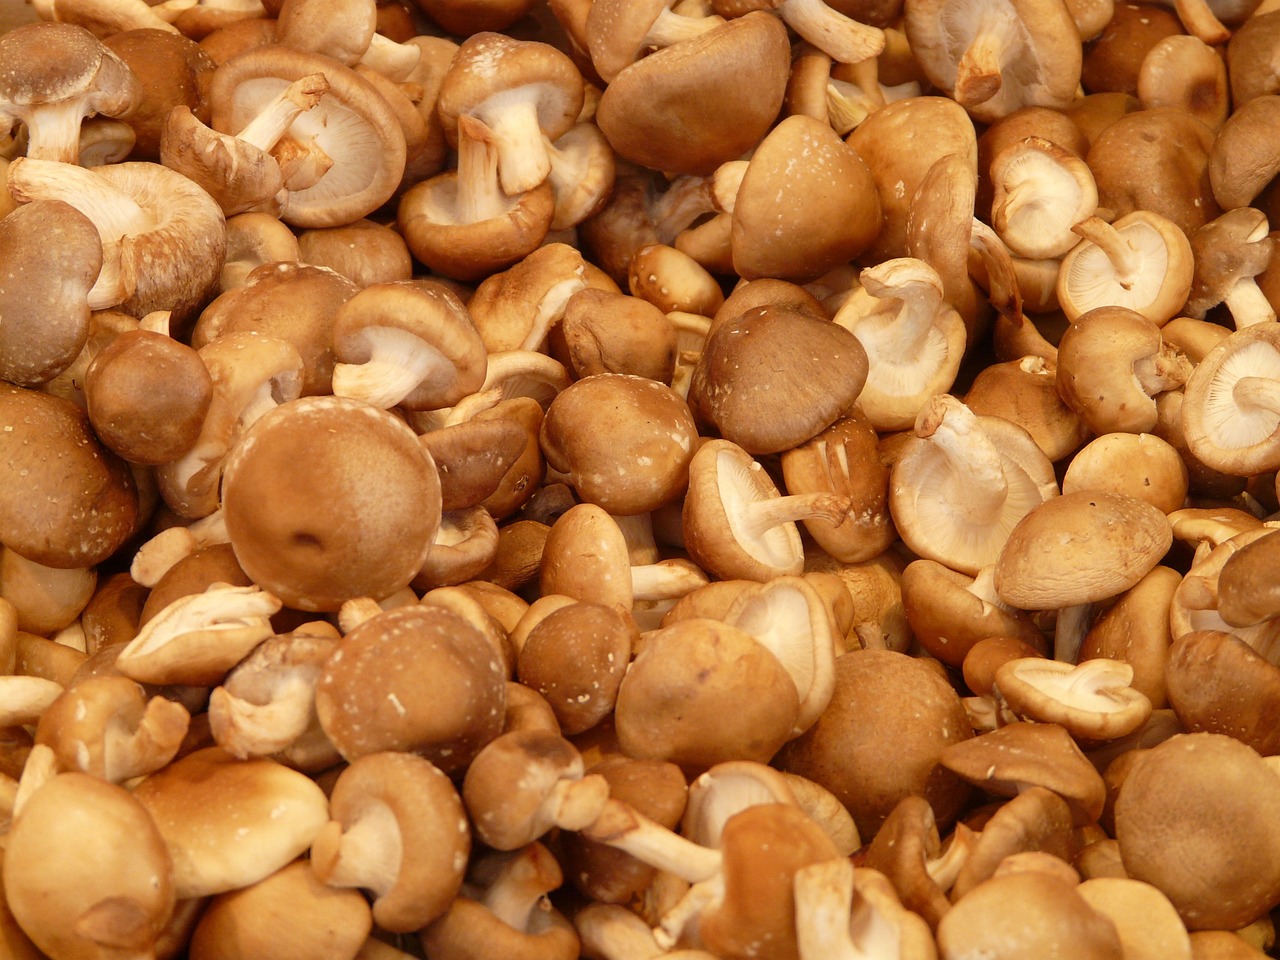 Medicinal Benefits of Mushrooms